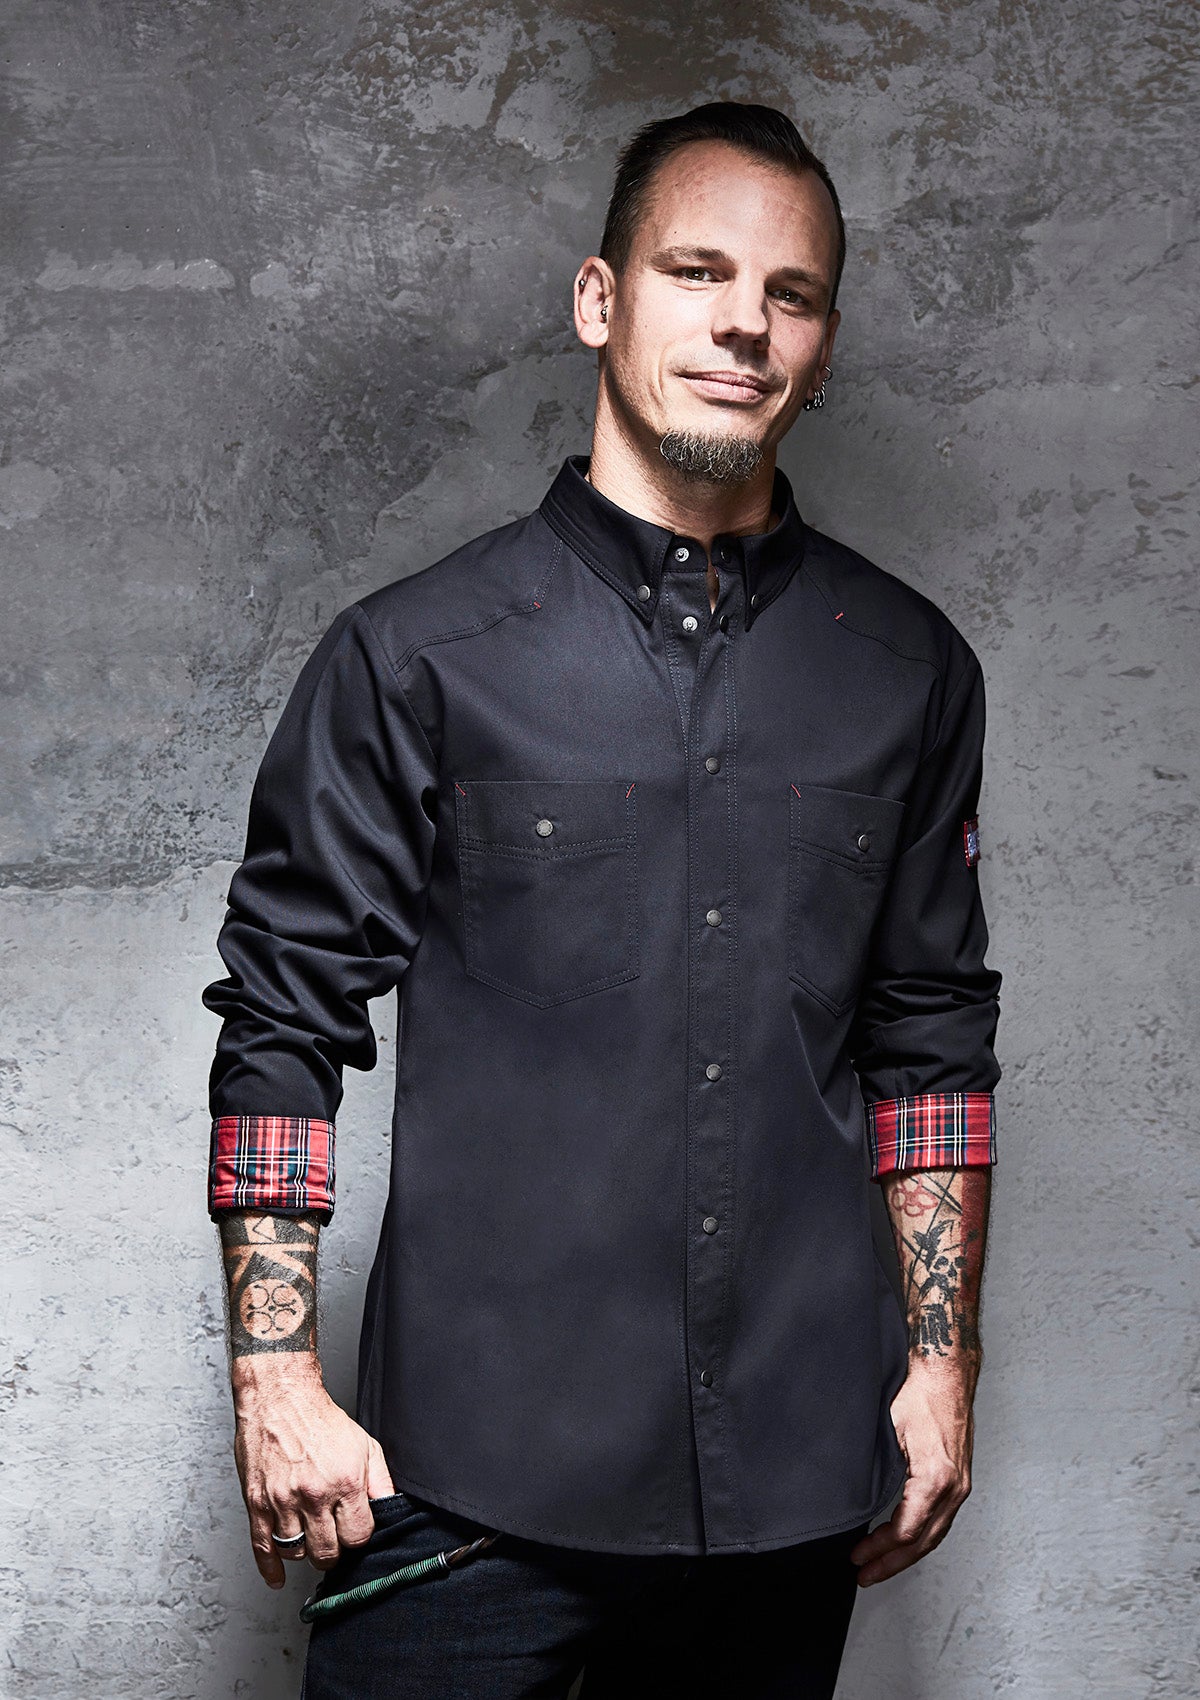 Men's Chef Shirt Long Sleeves ROCK CHEF®